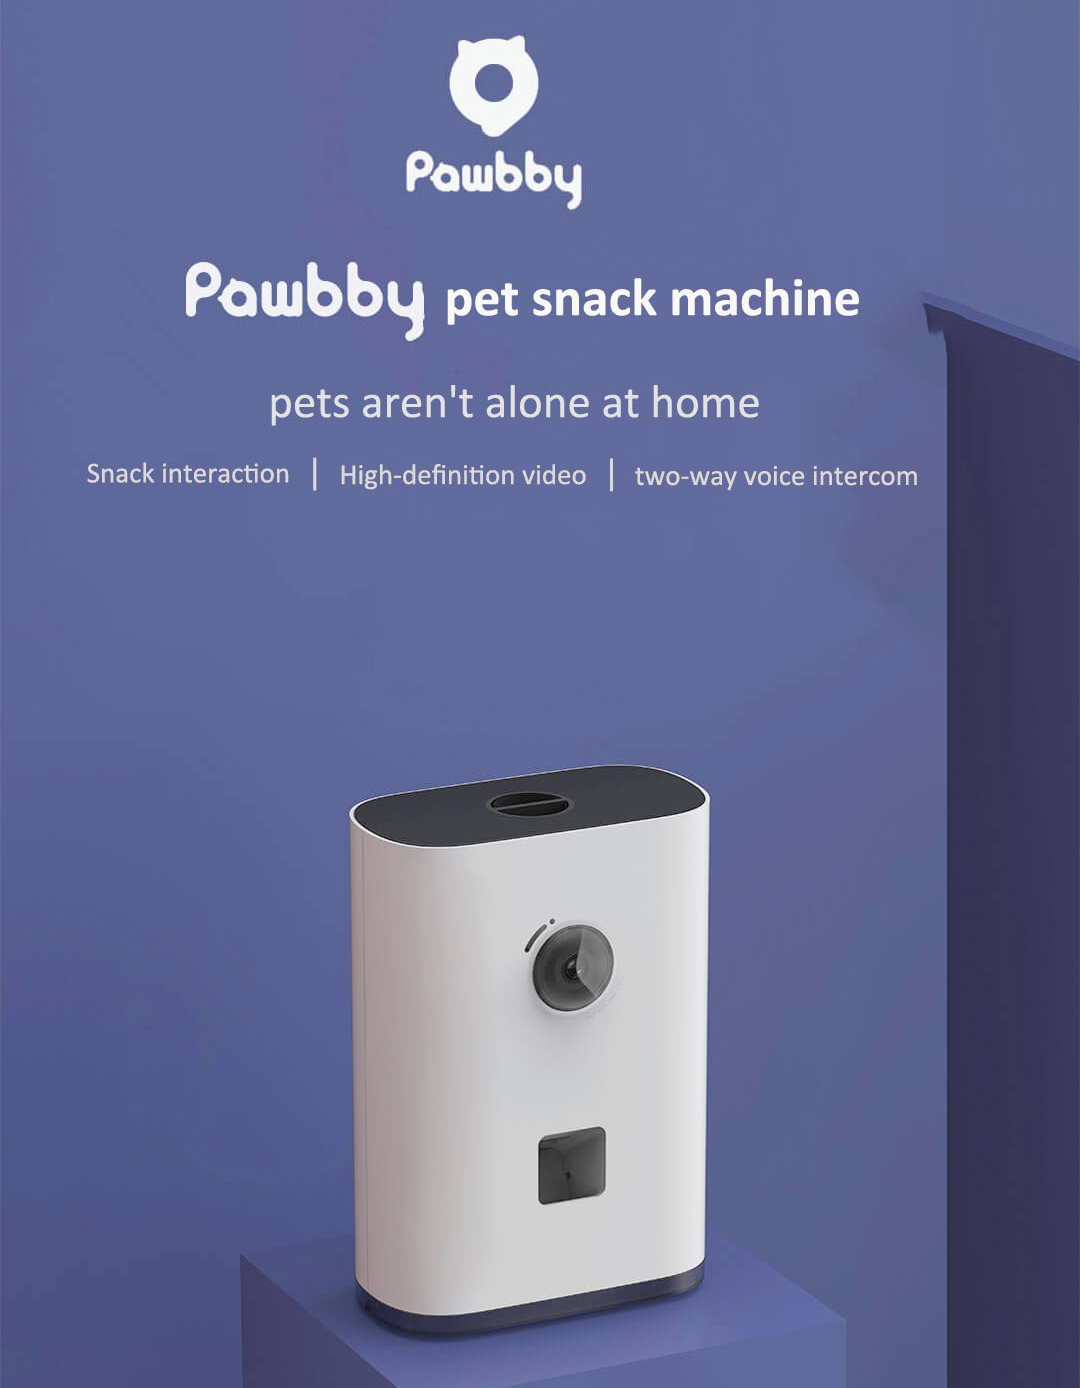 Pawbby Smart Pet Snack Machine